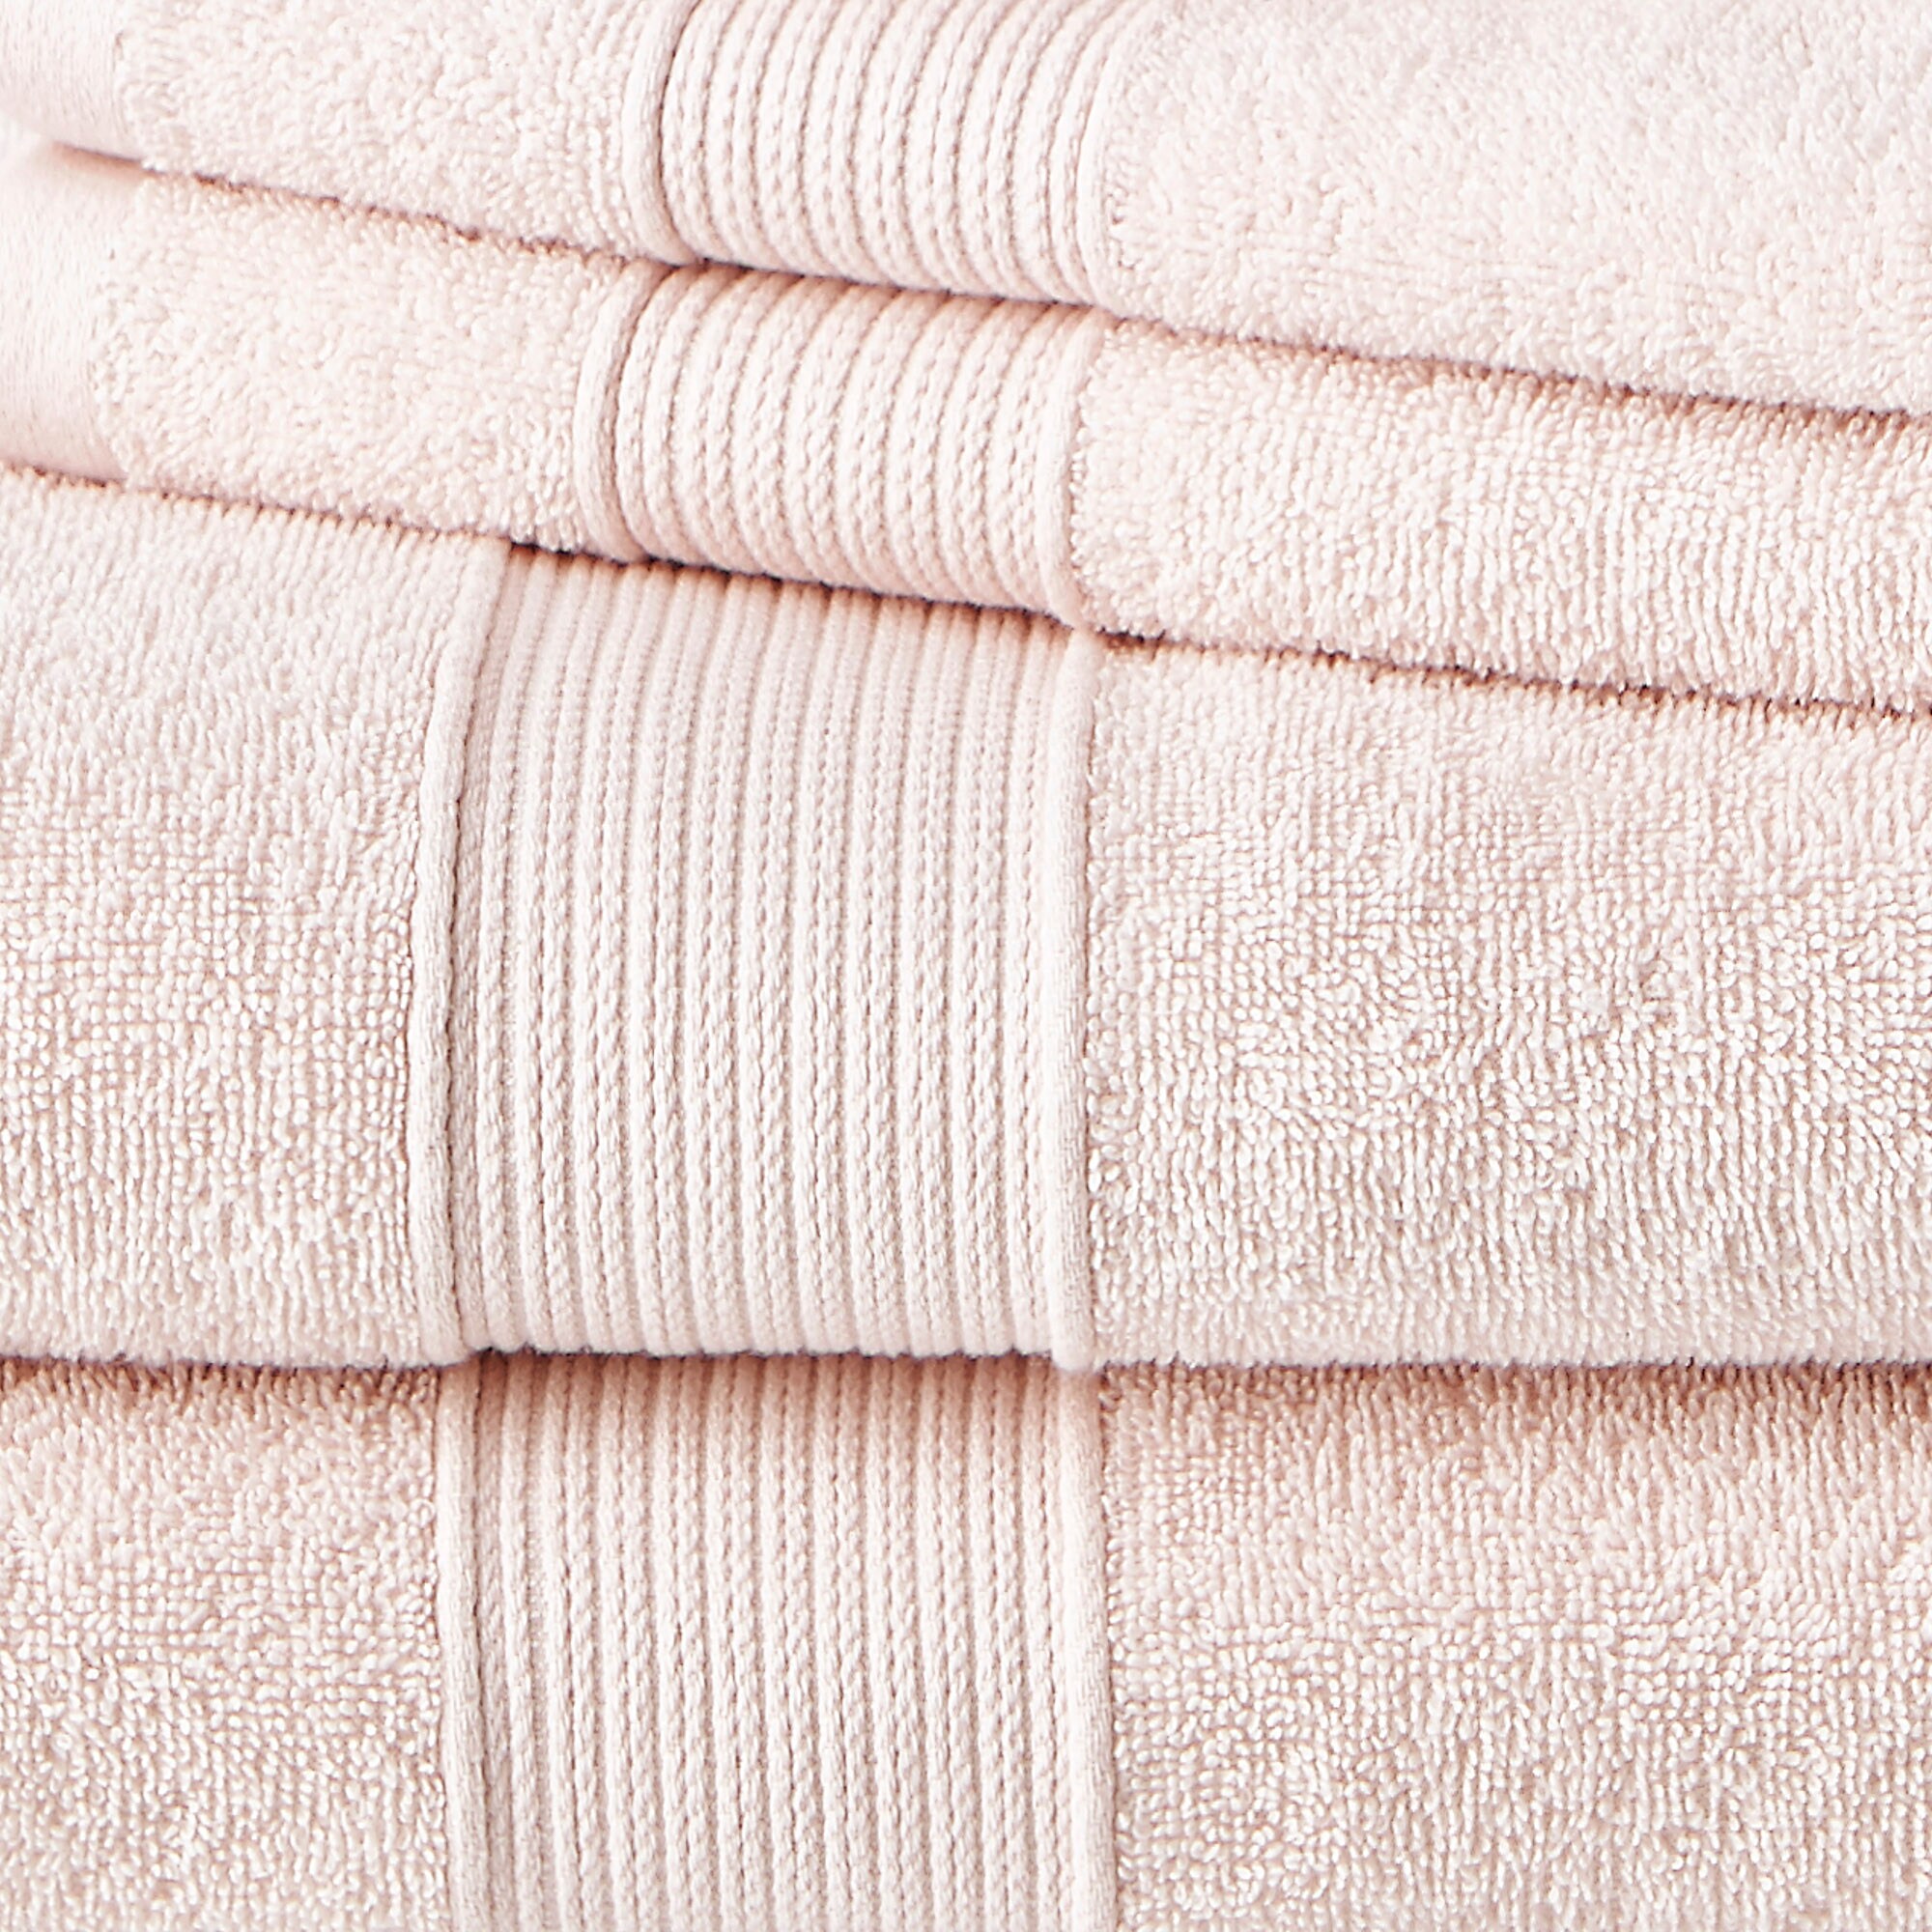 Brielle Home 6-Piece Blush Cotton Bath Towel Set in the Bathroom Towels ...